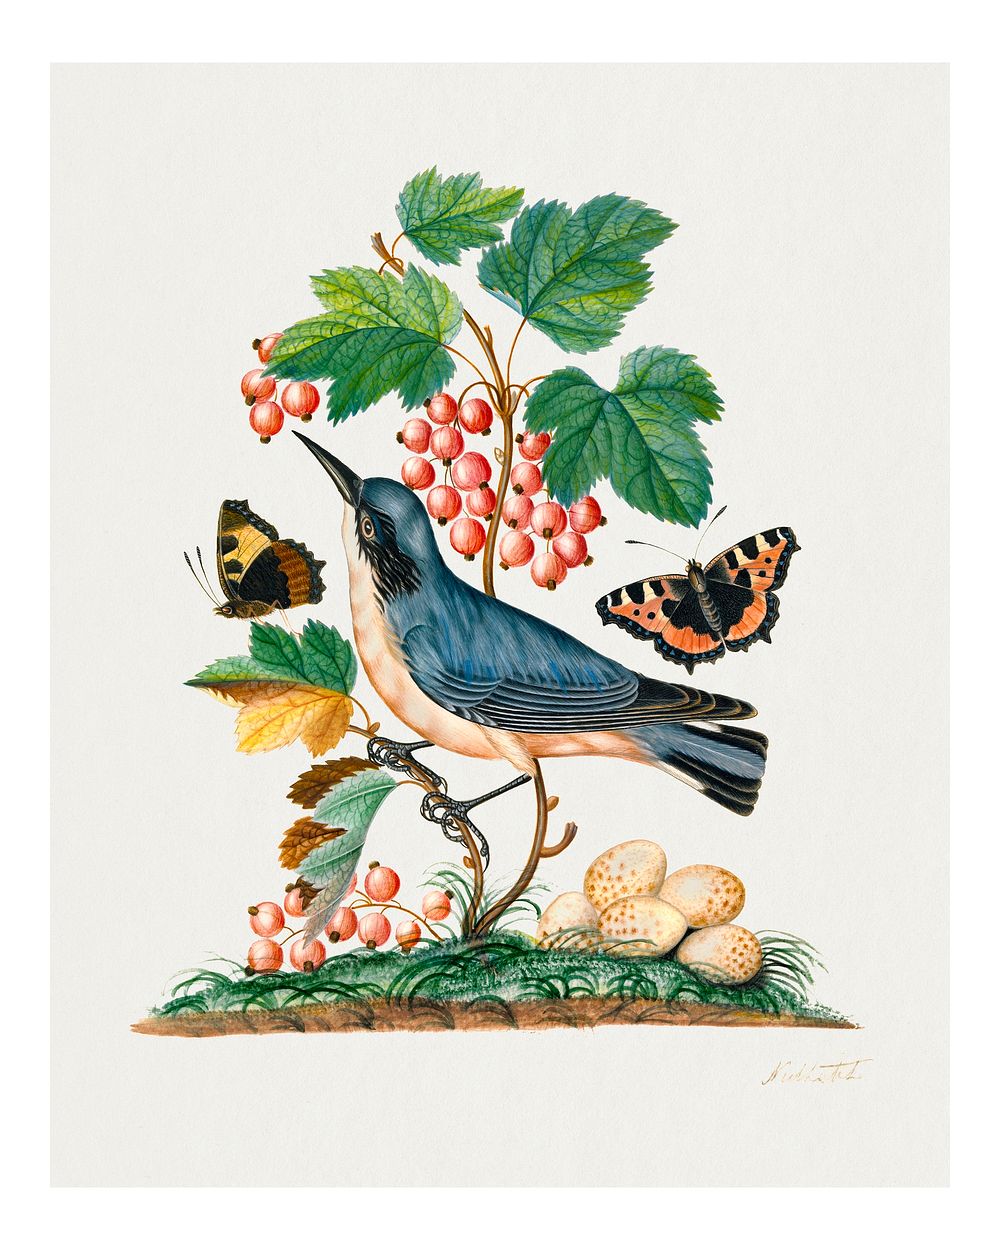 Vintage botanical art print, bird, butterflies, remixed from artworks by James Bolton